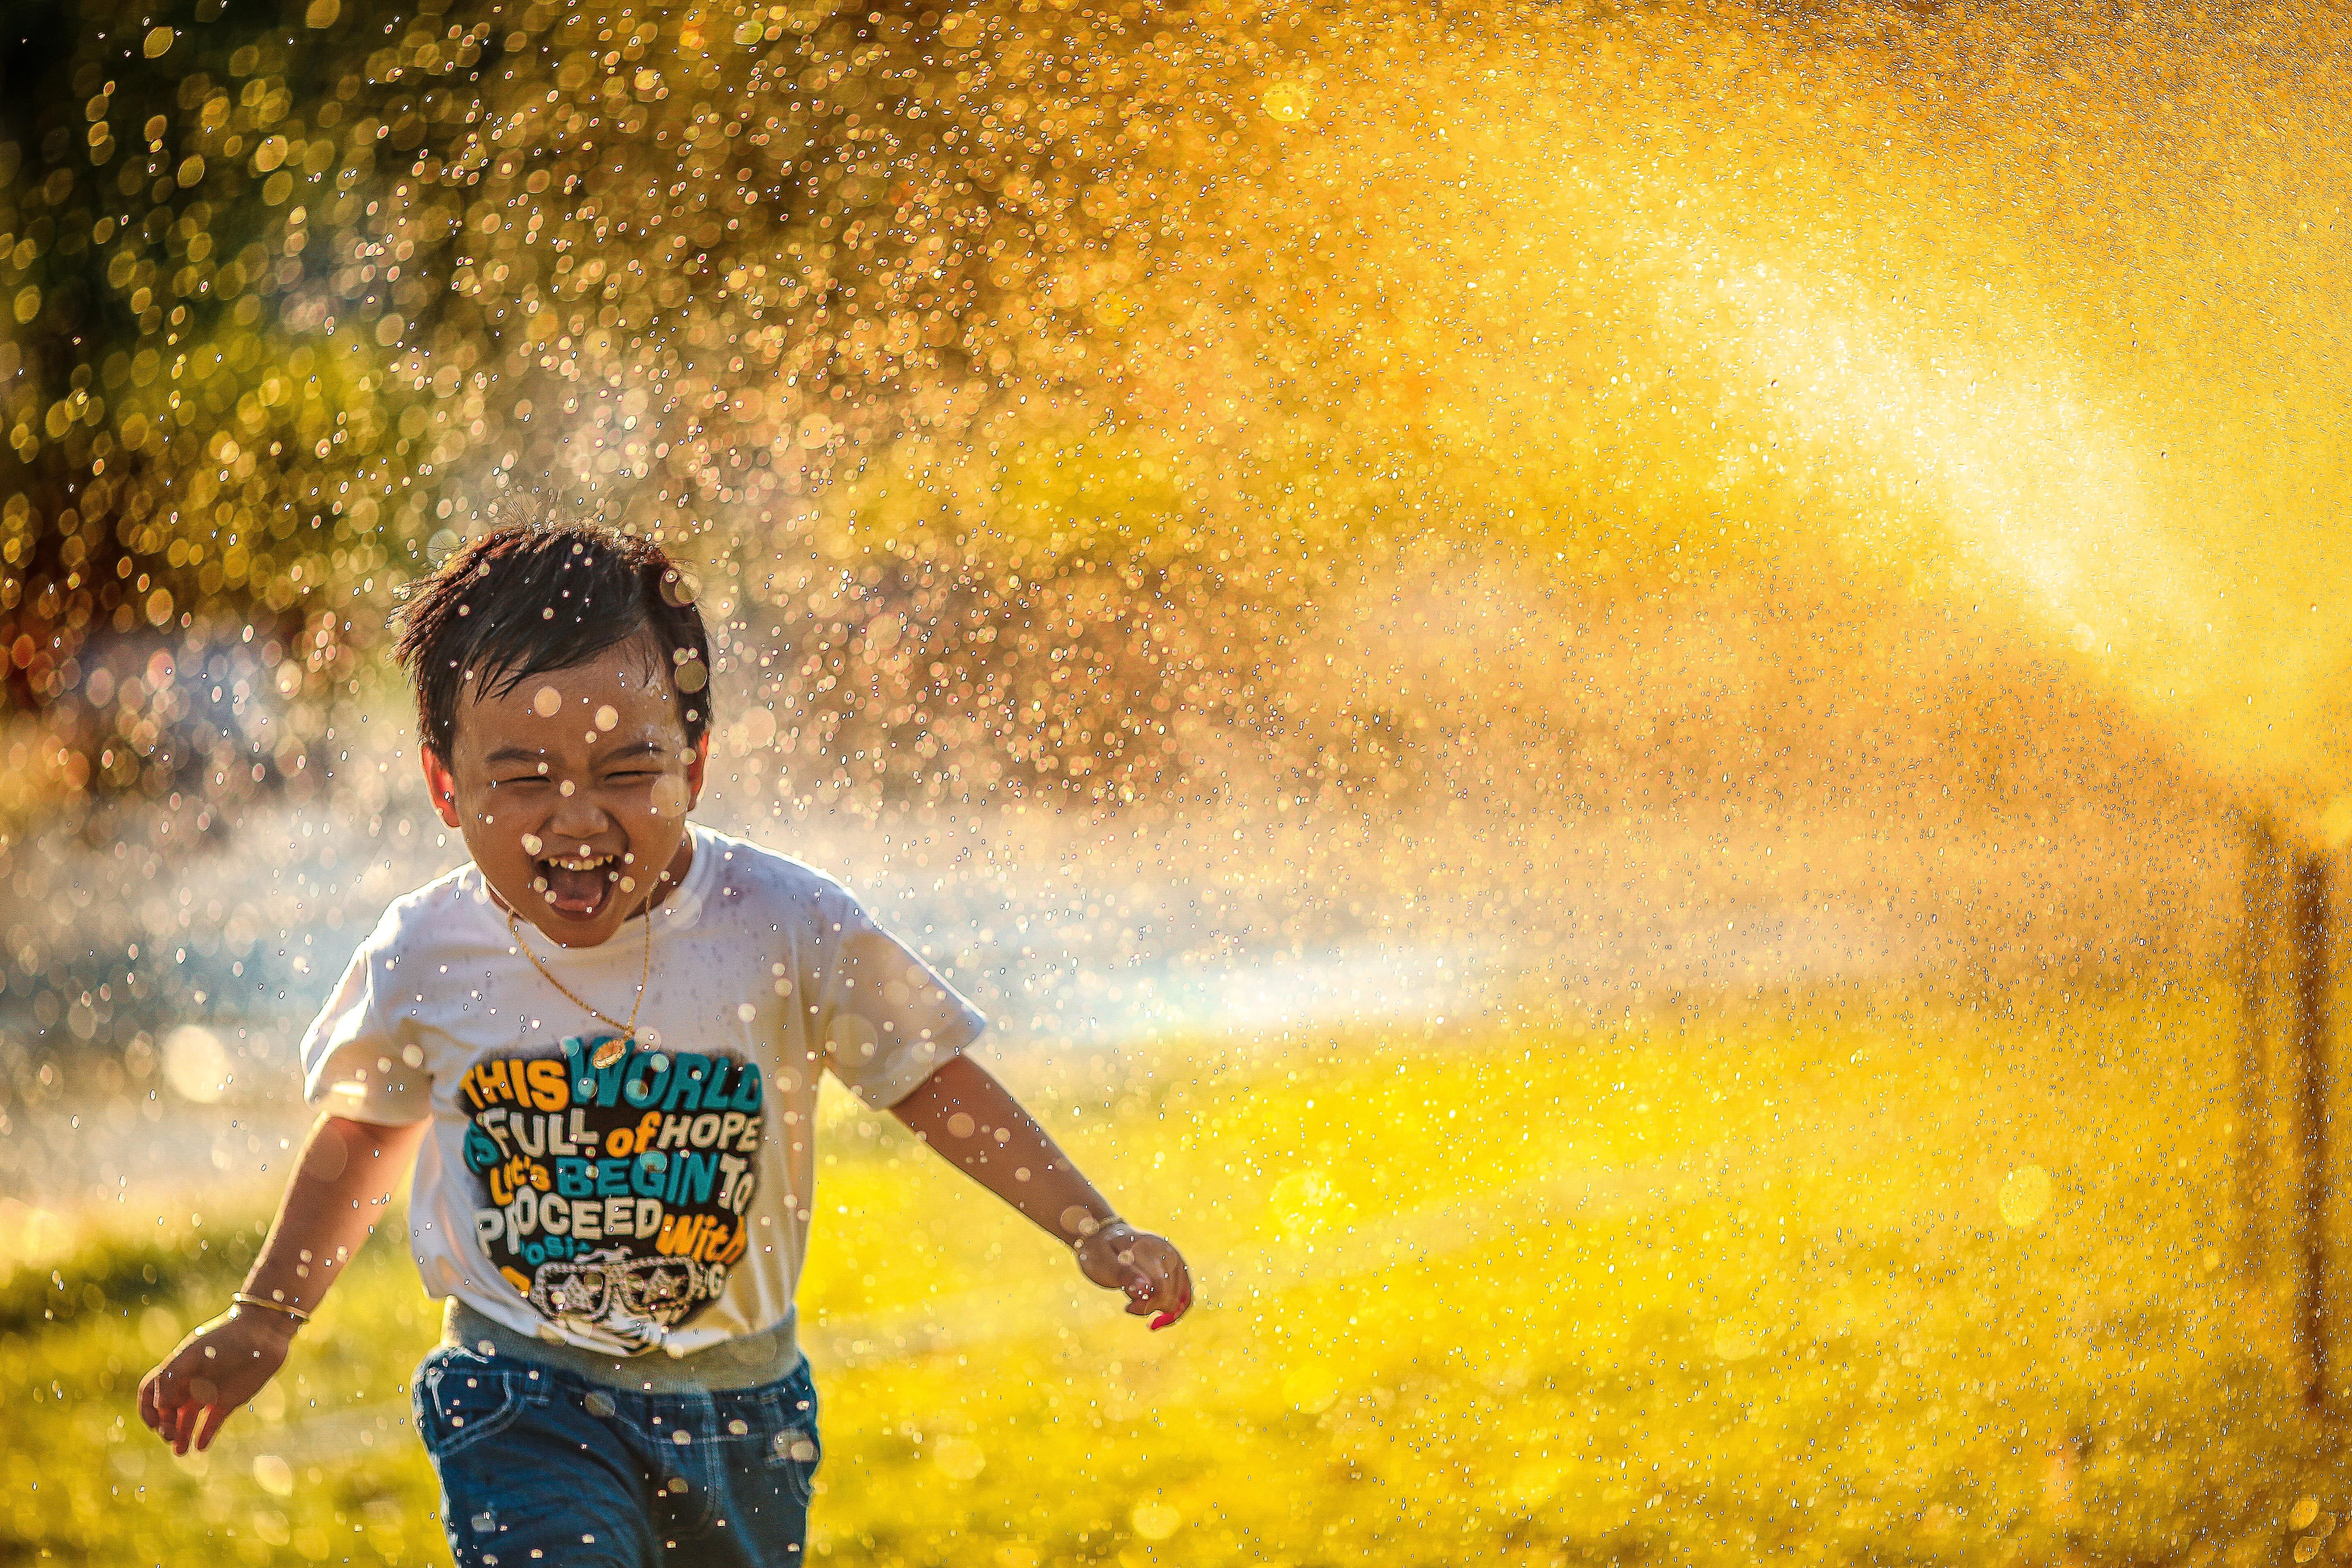 4928x3280 #splash, #fun, #fourth of july, #summer, #sprinkler, #child, #laugh, #Public domain image, #wallpaper, #happy, #american flag, # kid, #wet, #play, #joy, #laughter, #boy, #childhood, #cute wallpaper, #water, #smiling. Mocah HD Wallpaper